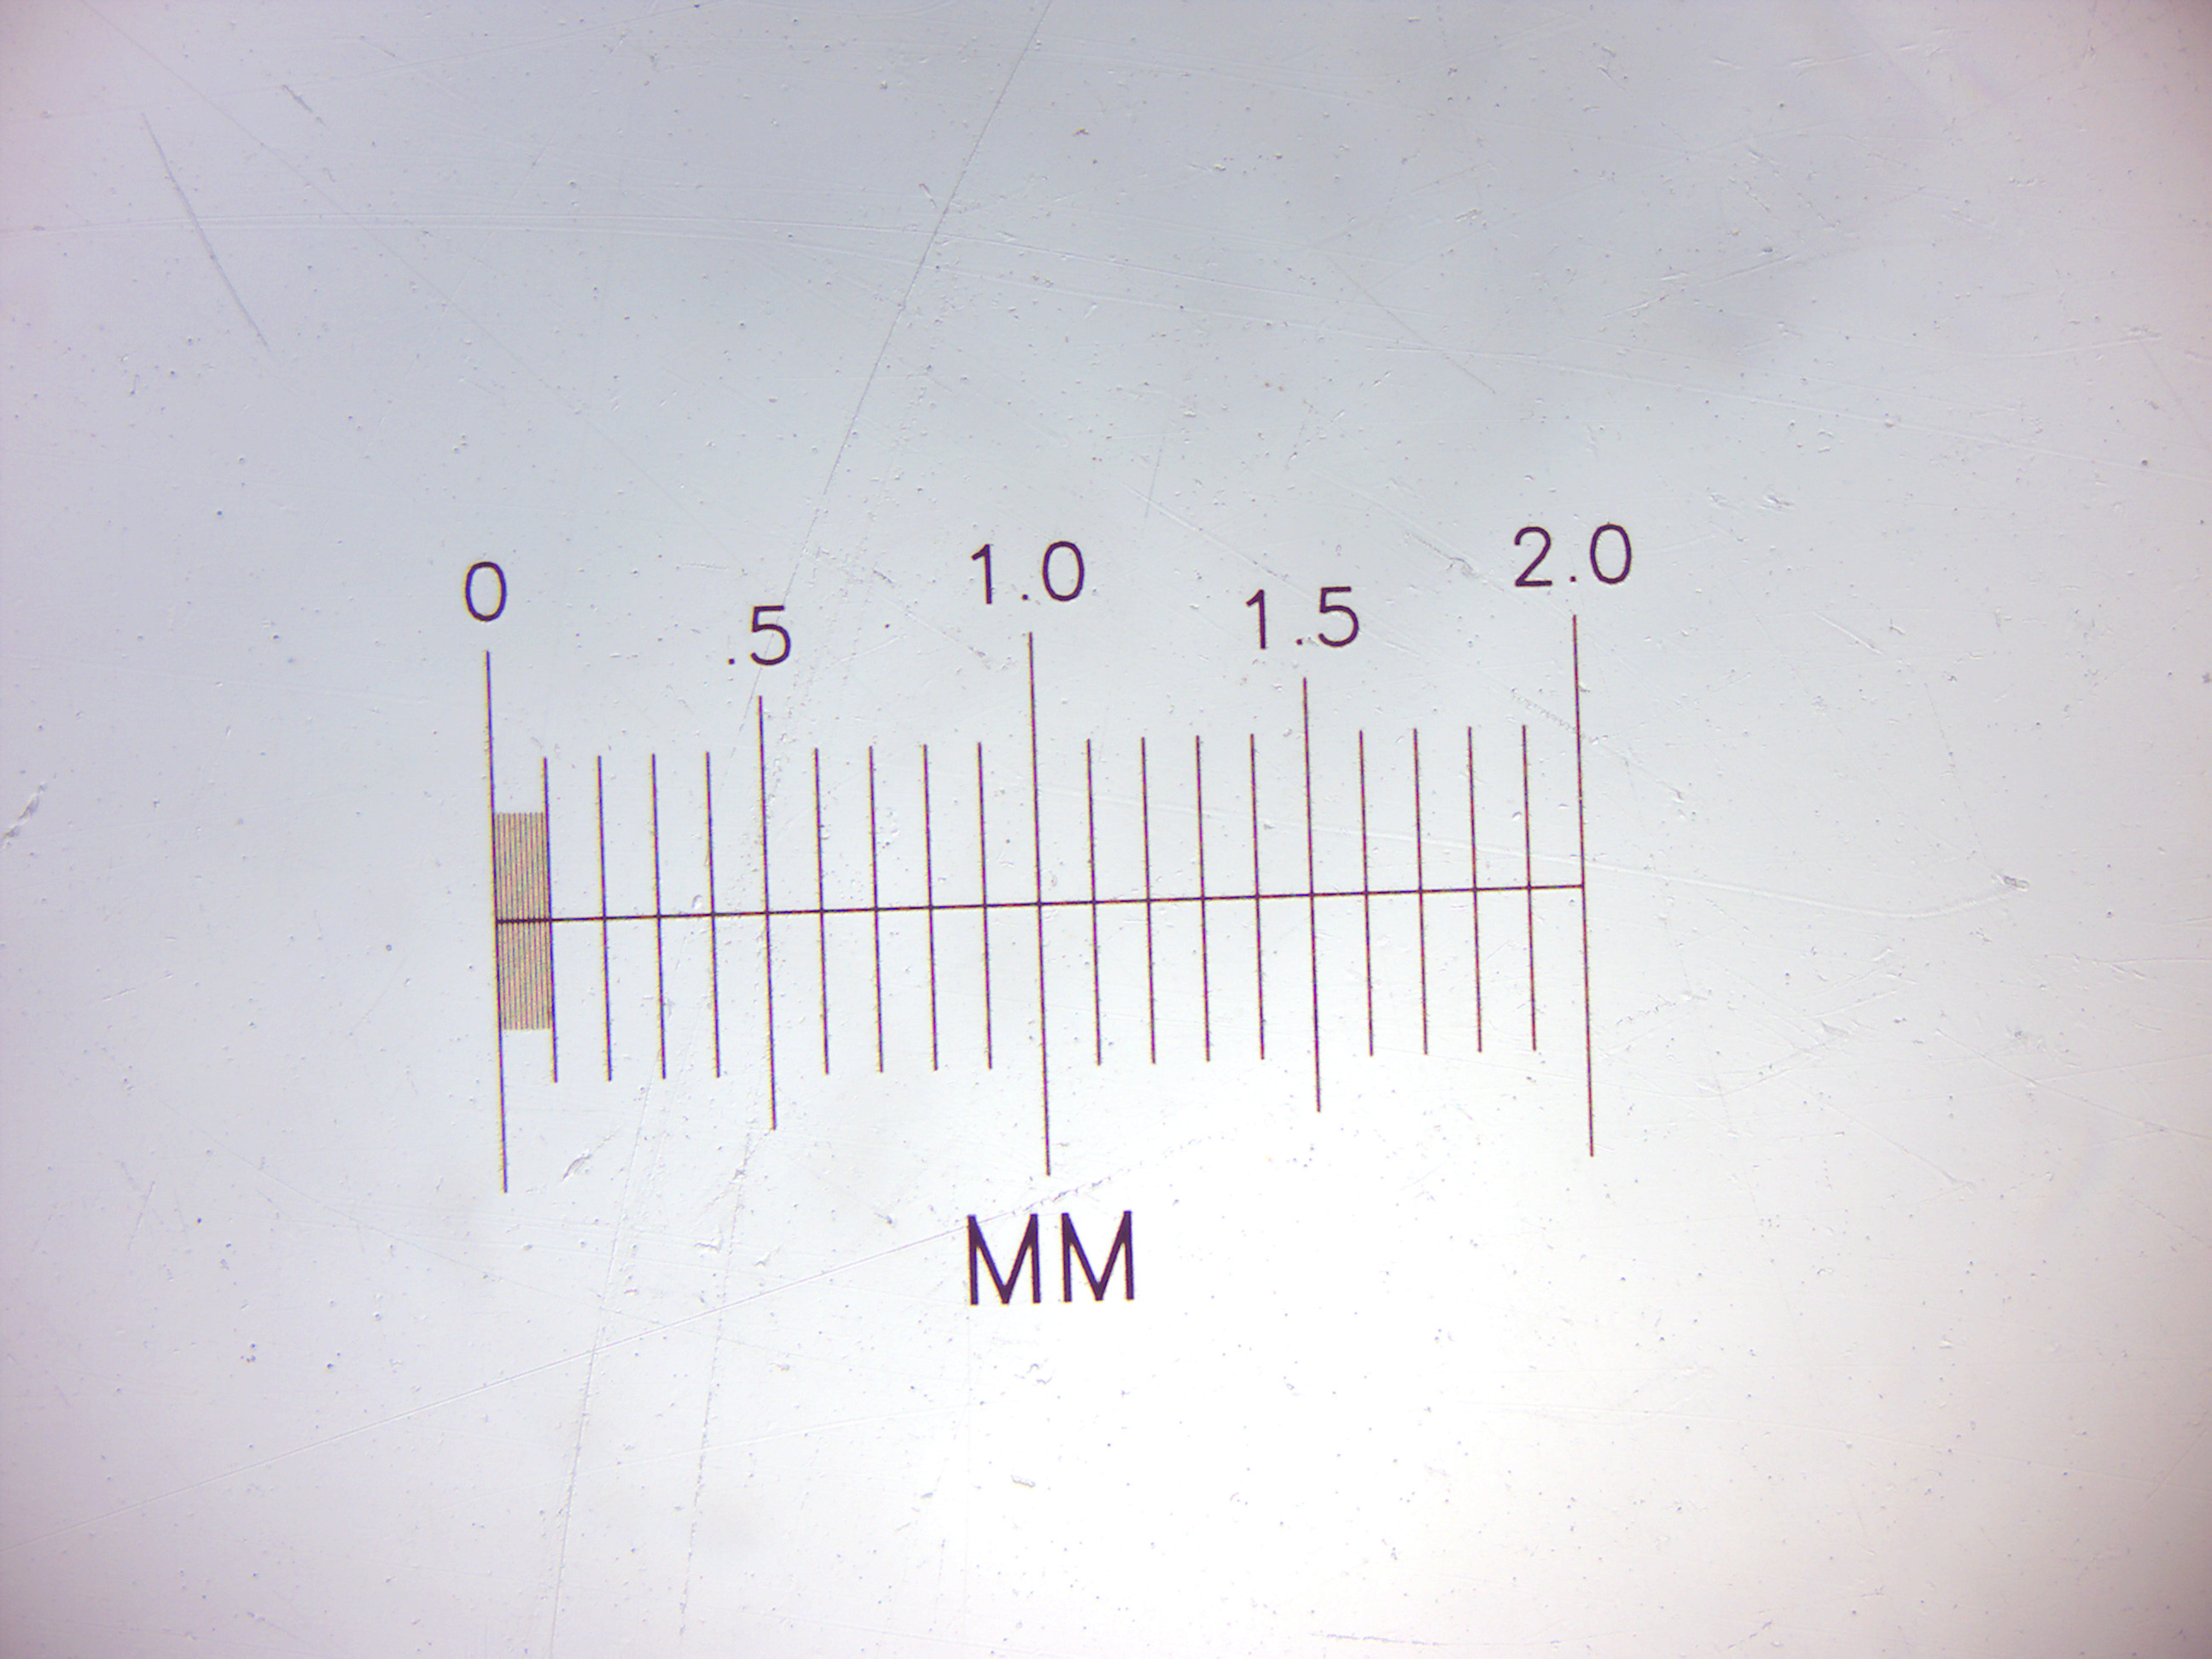 A microscopic scale.